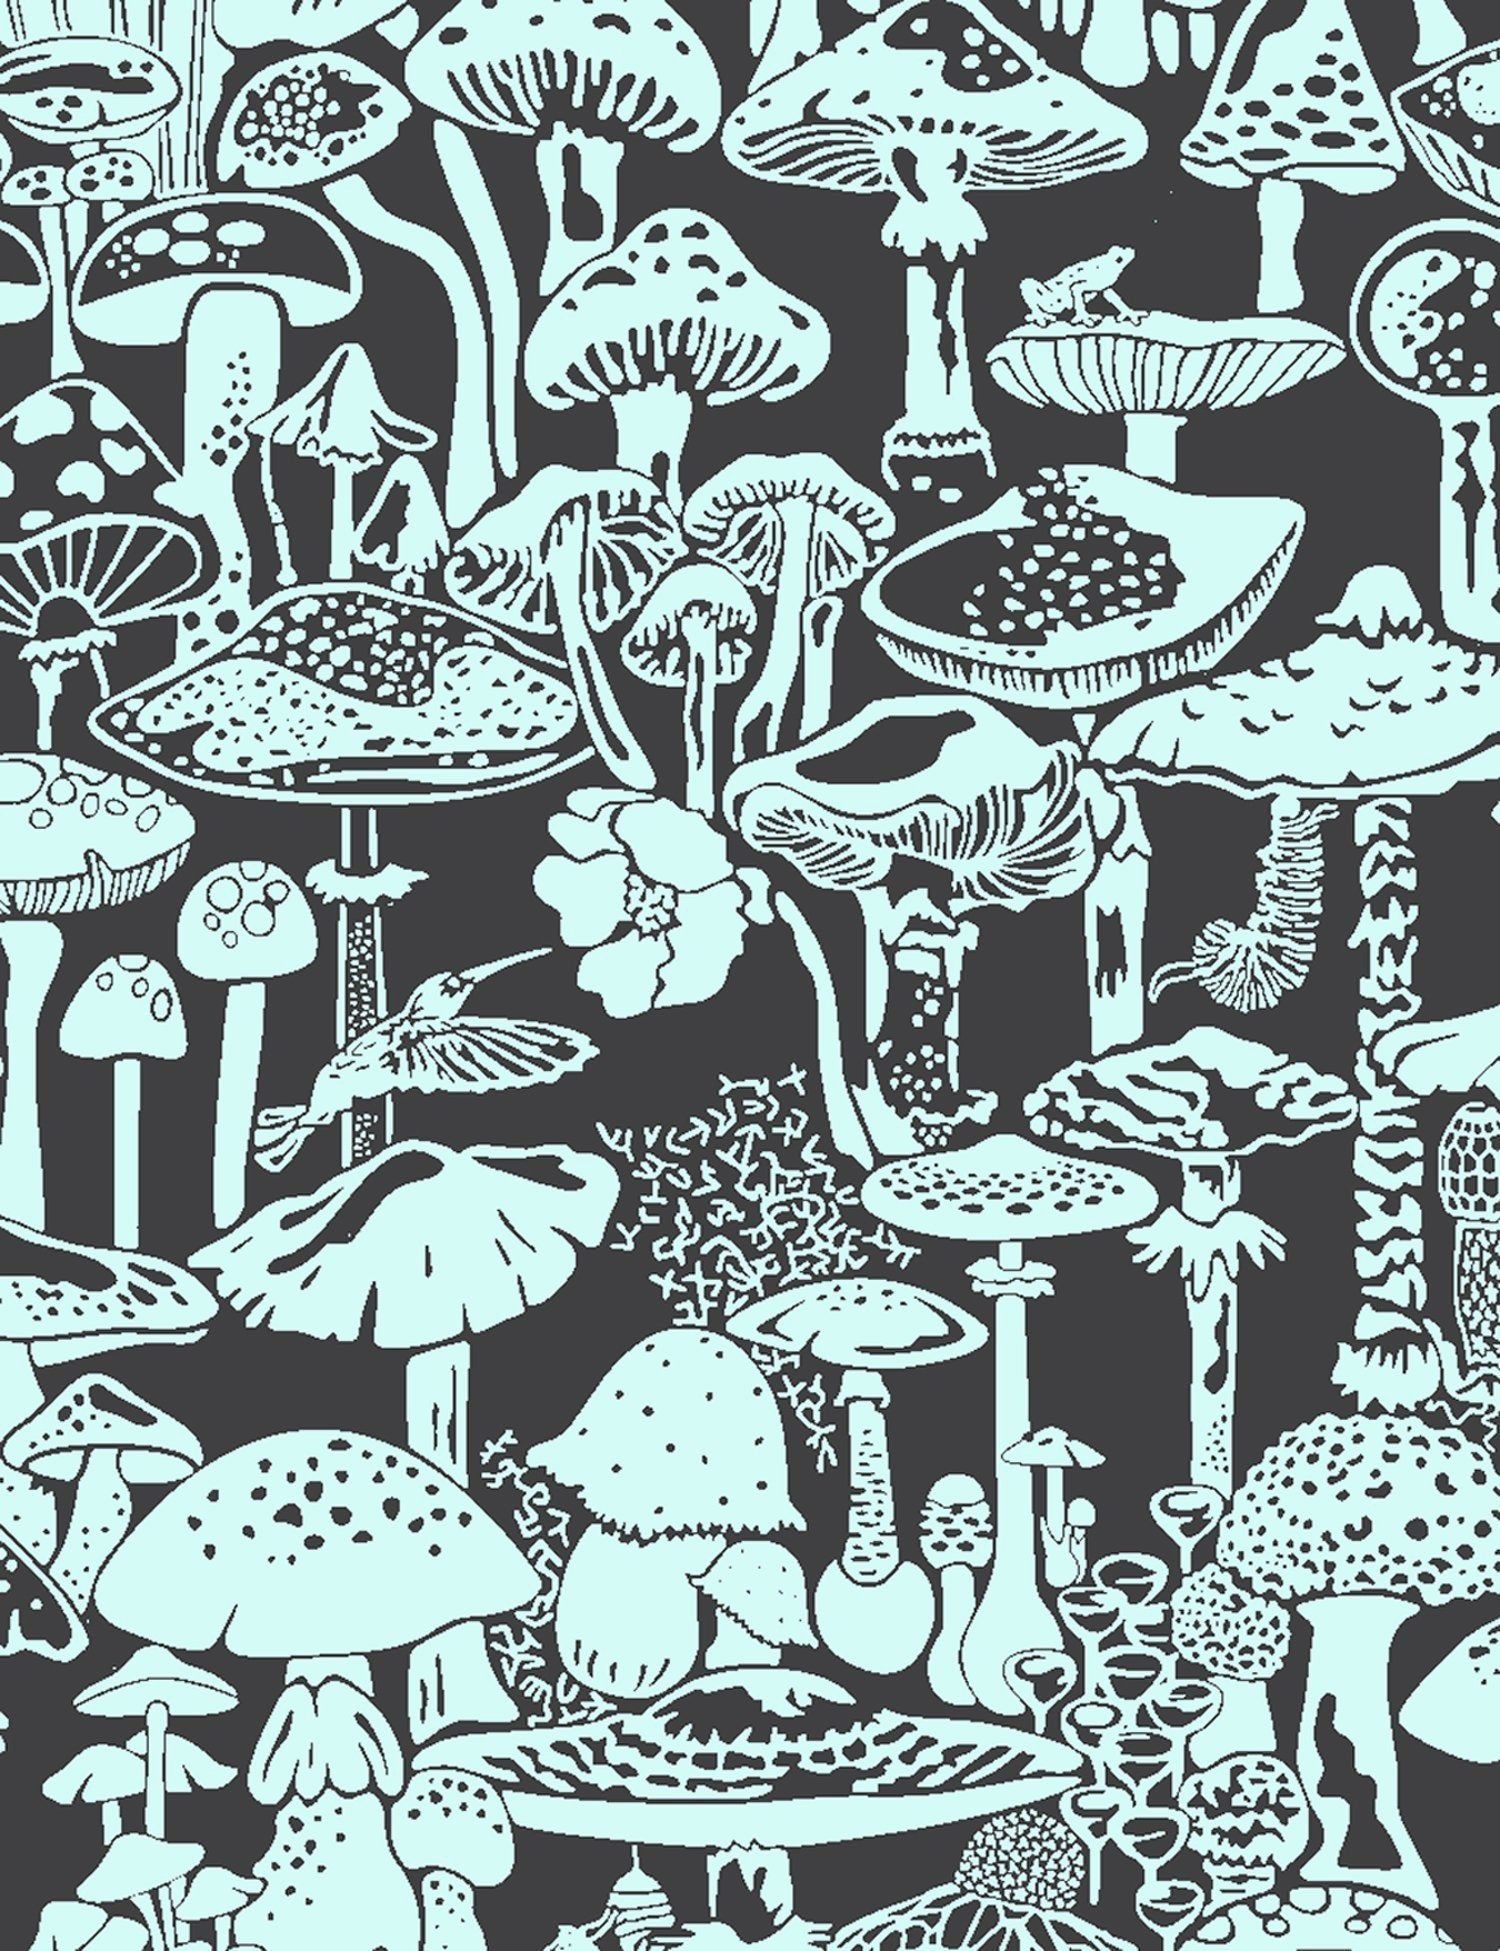 Mushroom City Designer Wallpaper by Aimée Wilder. Made in the USA